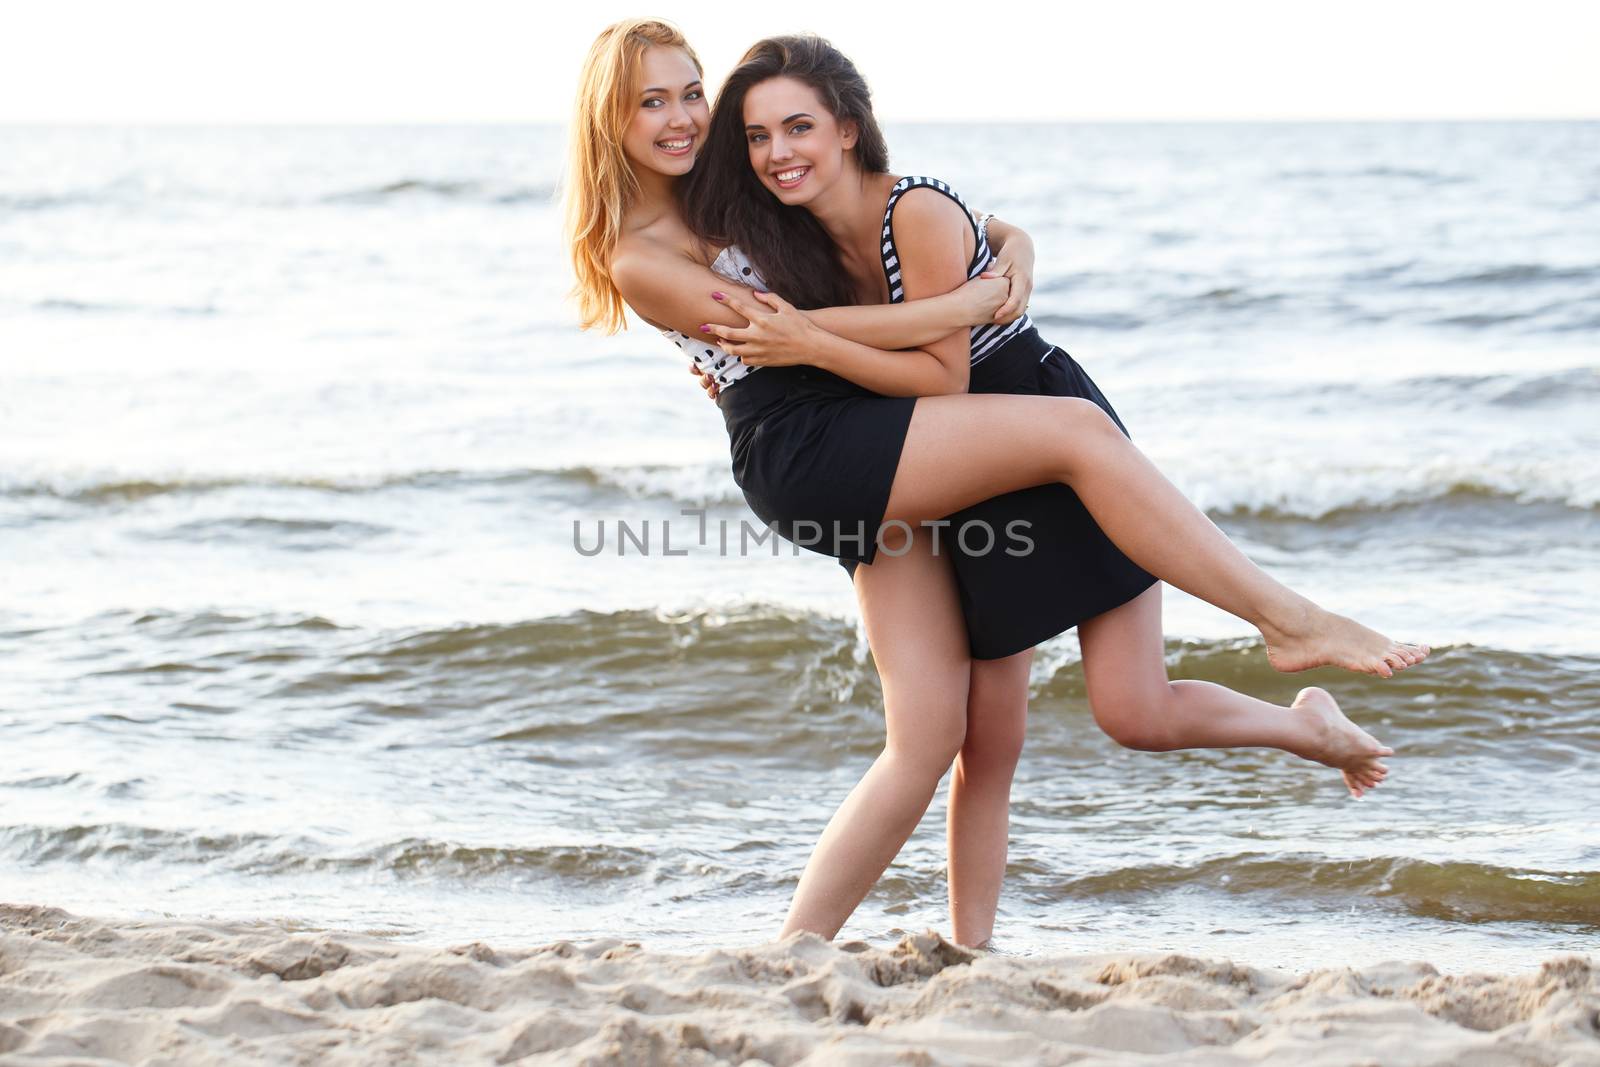 Best friends on the beach by rufatjumali